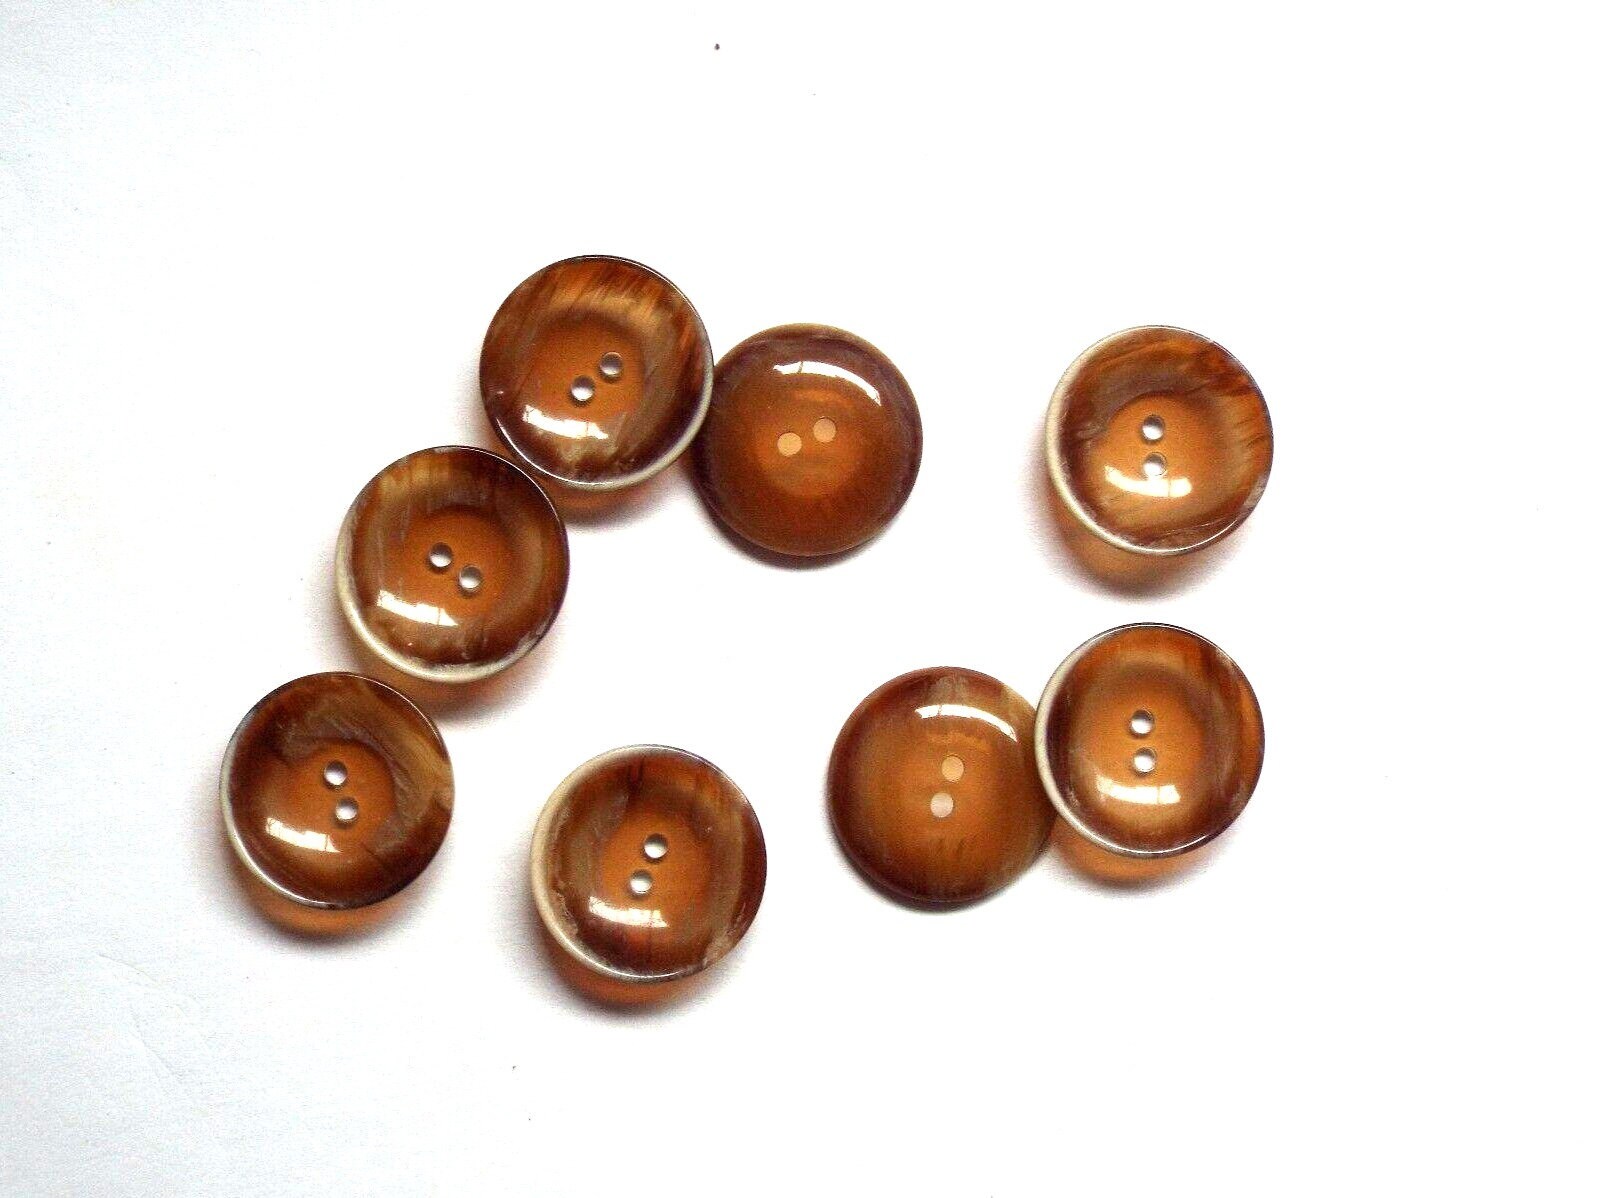  VILLCASE 10pcs Wooden Coat Buttons Flatback Buttons